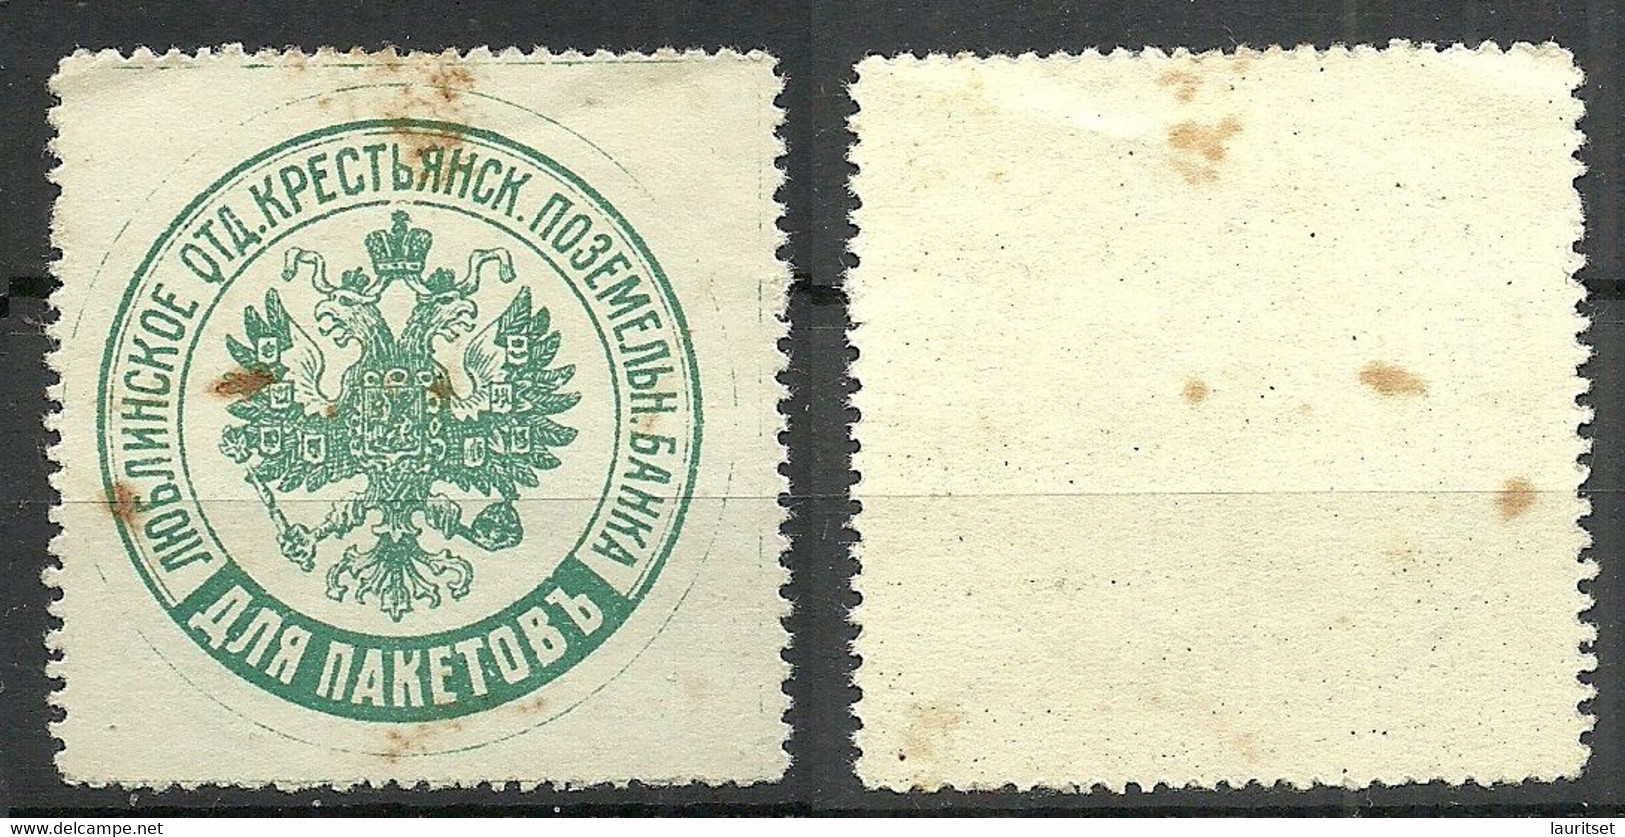 Imperial RUSSLAND RUSSIA Packet Stamp Paketenmarke Original Gum MNH Lublin Bank Poland NB! Rusty Spots! Stockfleckig! - Variedades & Curiosidades